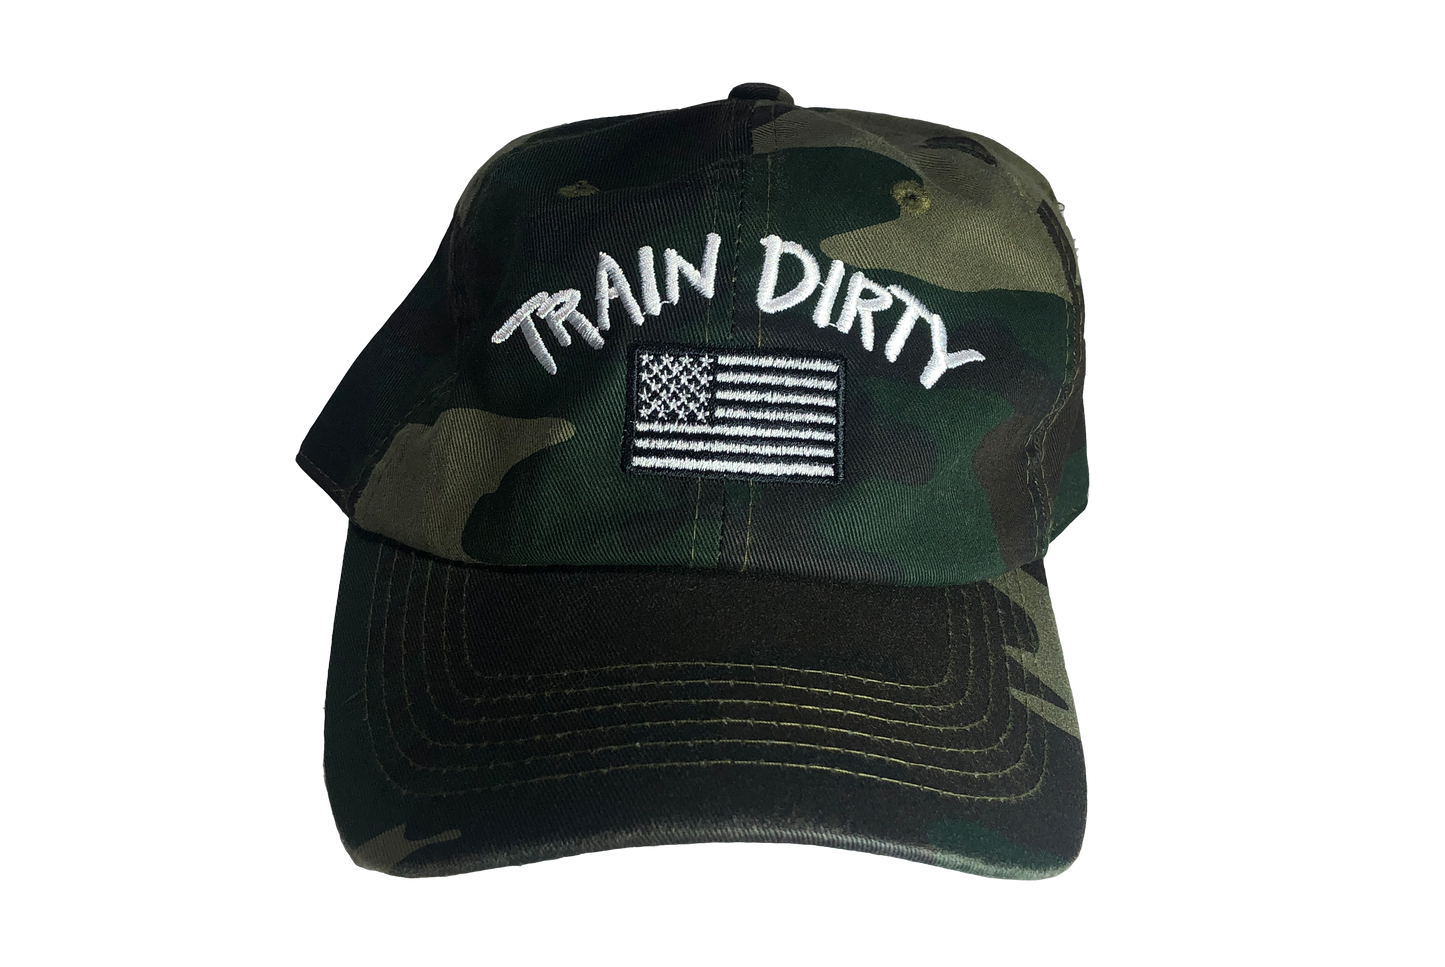 Train Dirty "Valor" strapback training cap